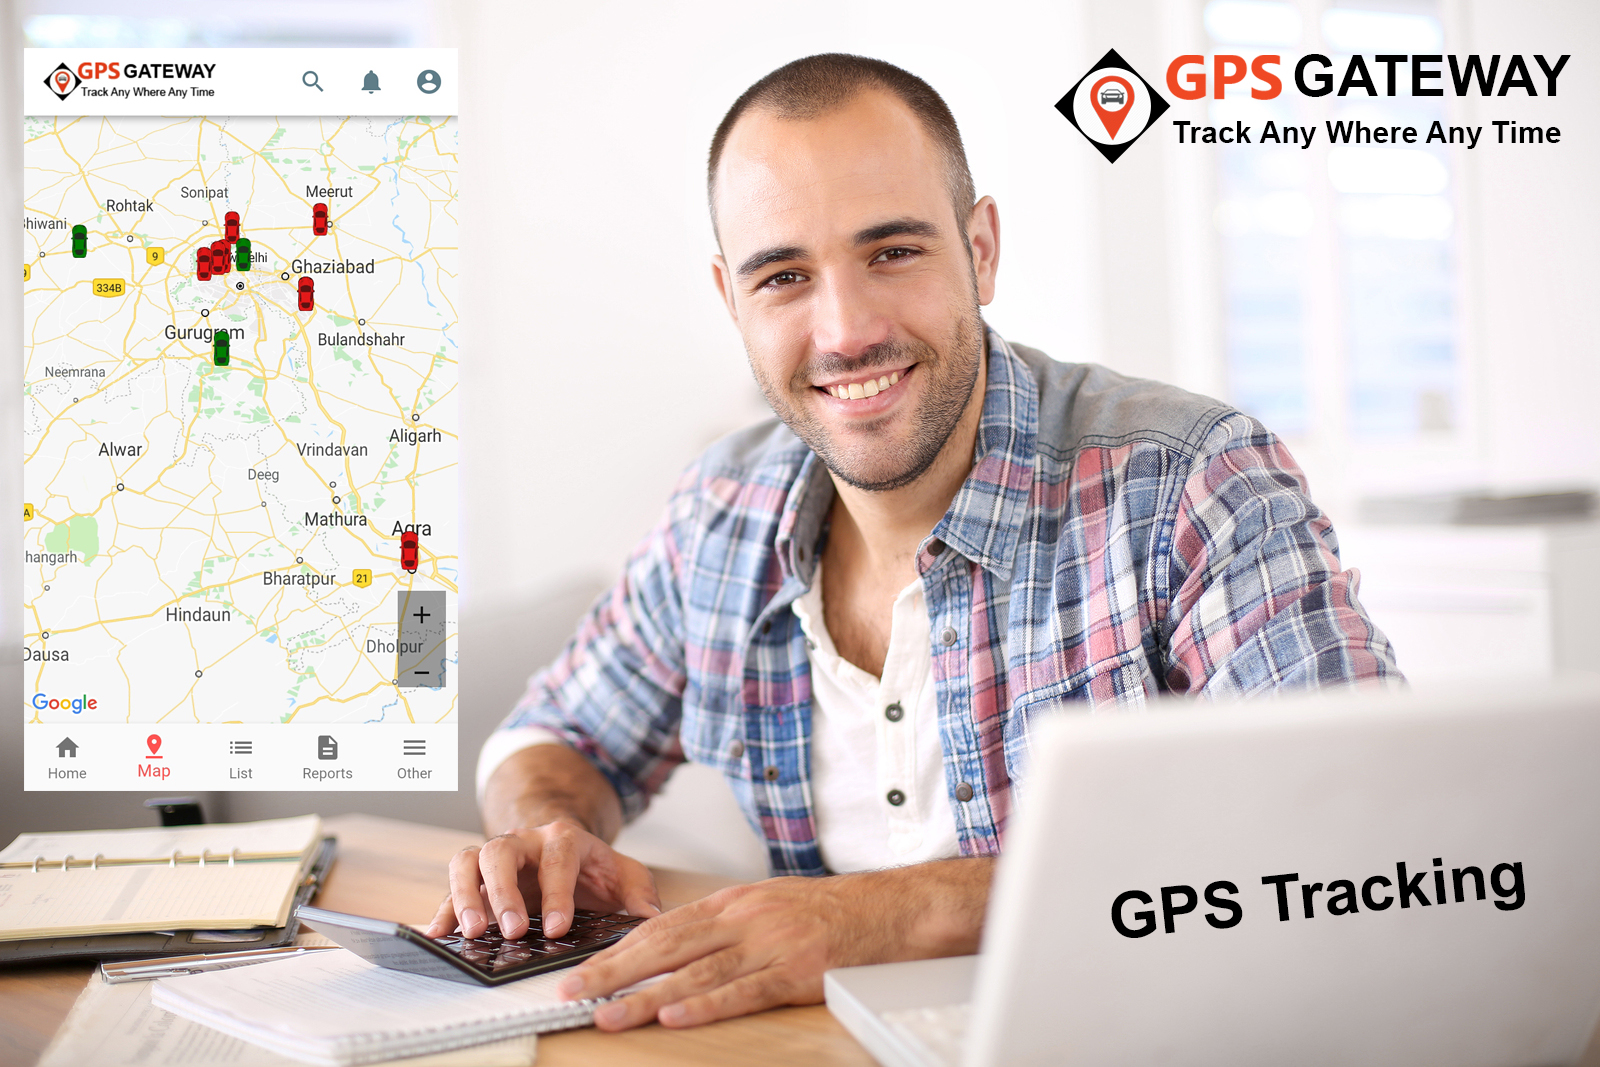 sales Staff Google Vehicle Tracking  software, pharma mr location tracking, vehicle gps tracker, field force Google Vehicle Tracking  device